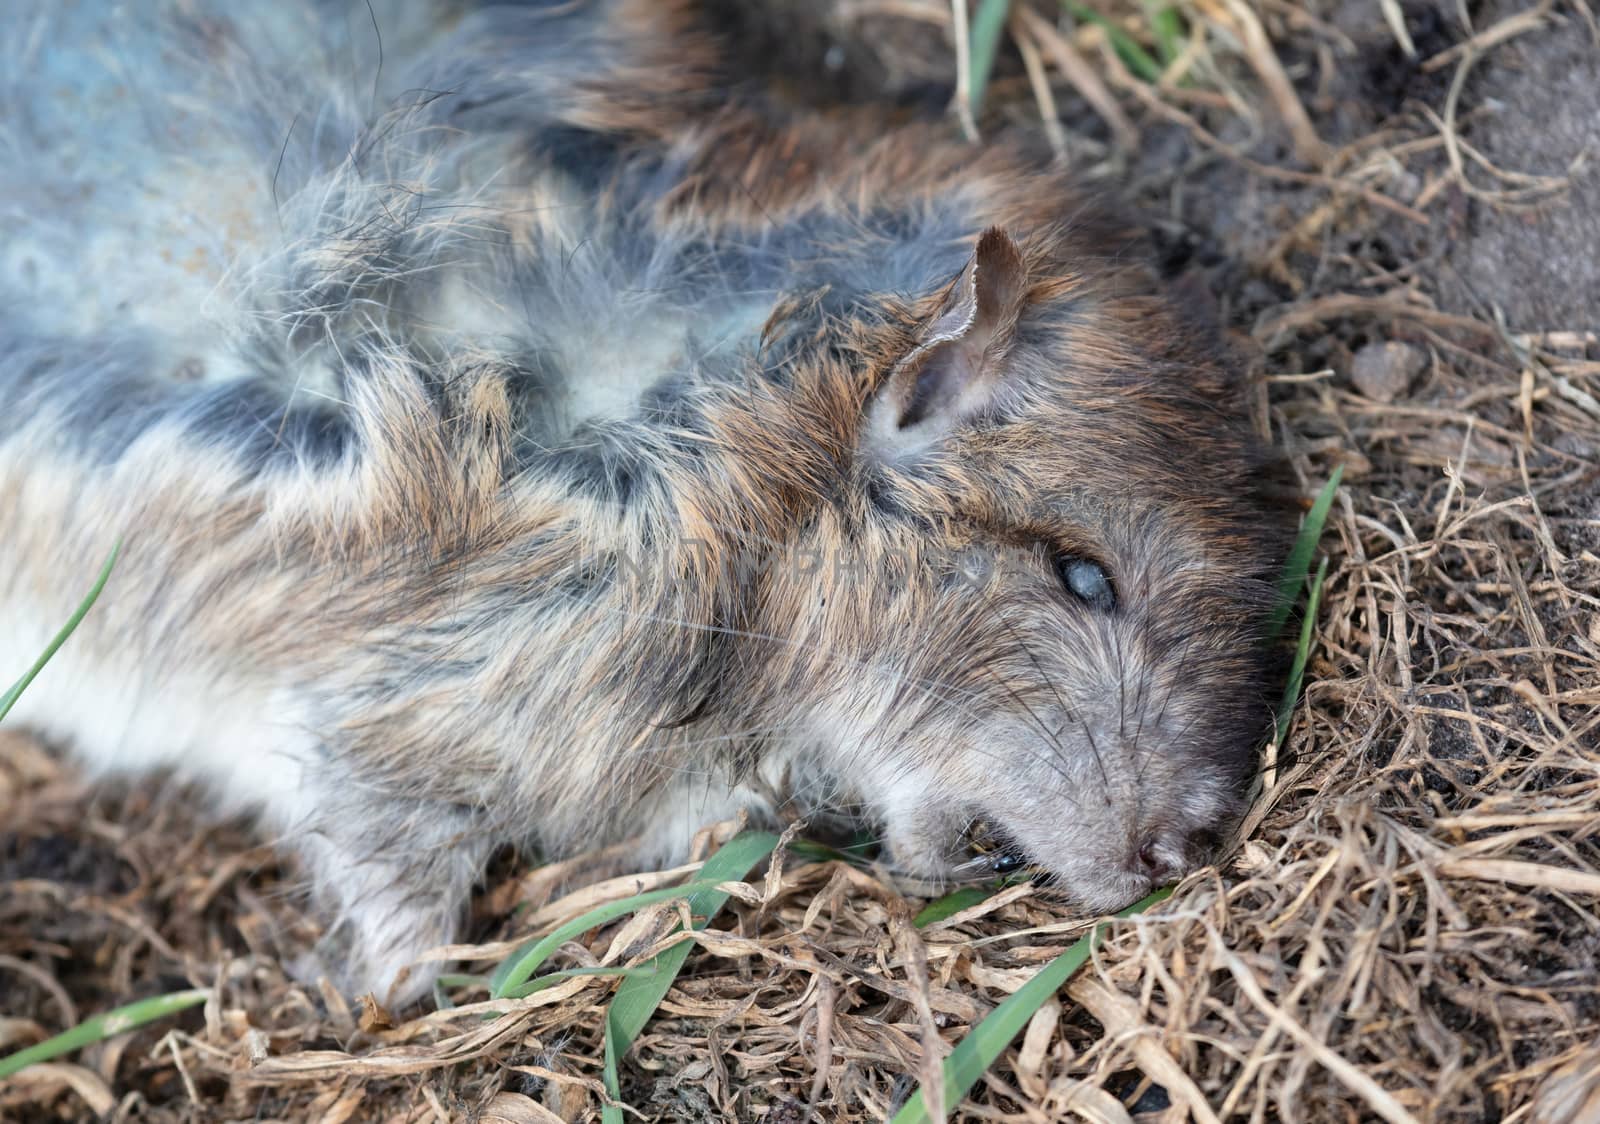 Dead muskrat lying in the grass by michaklootwijk